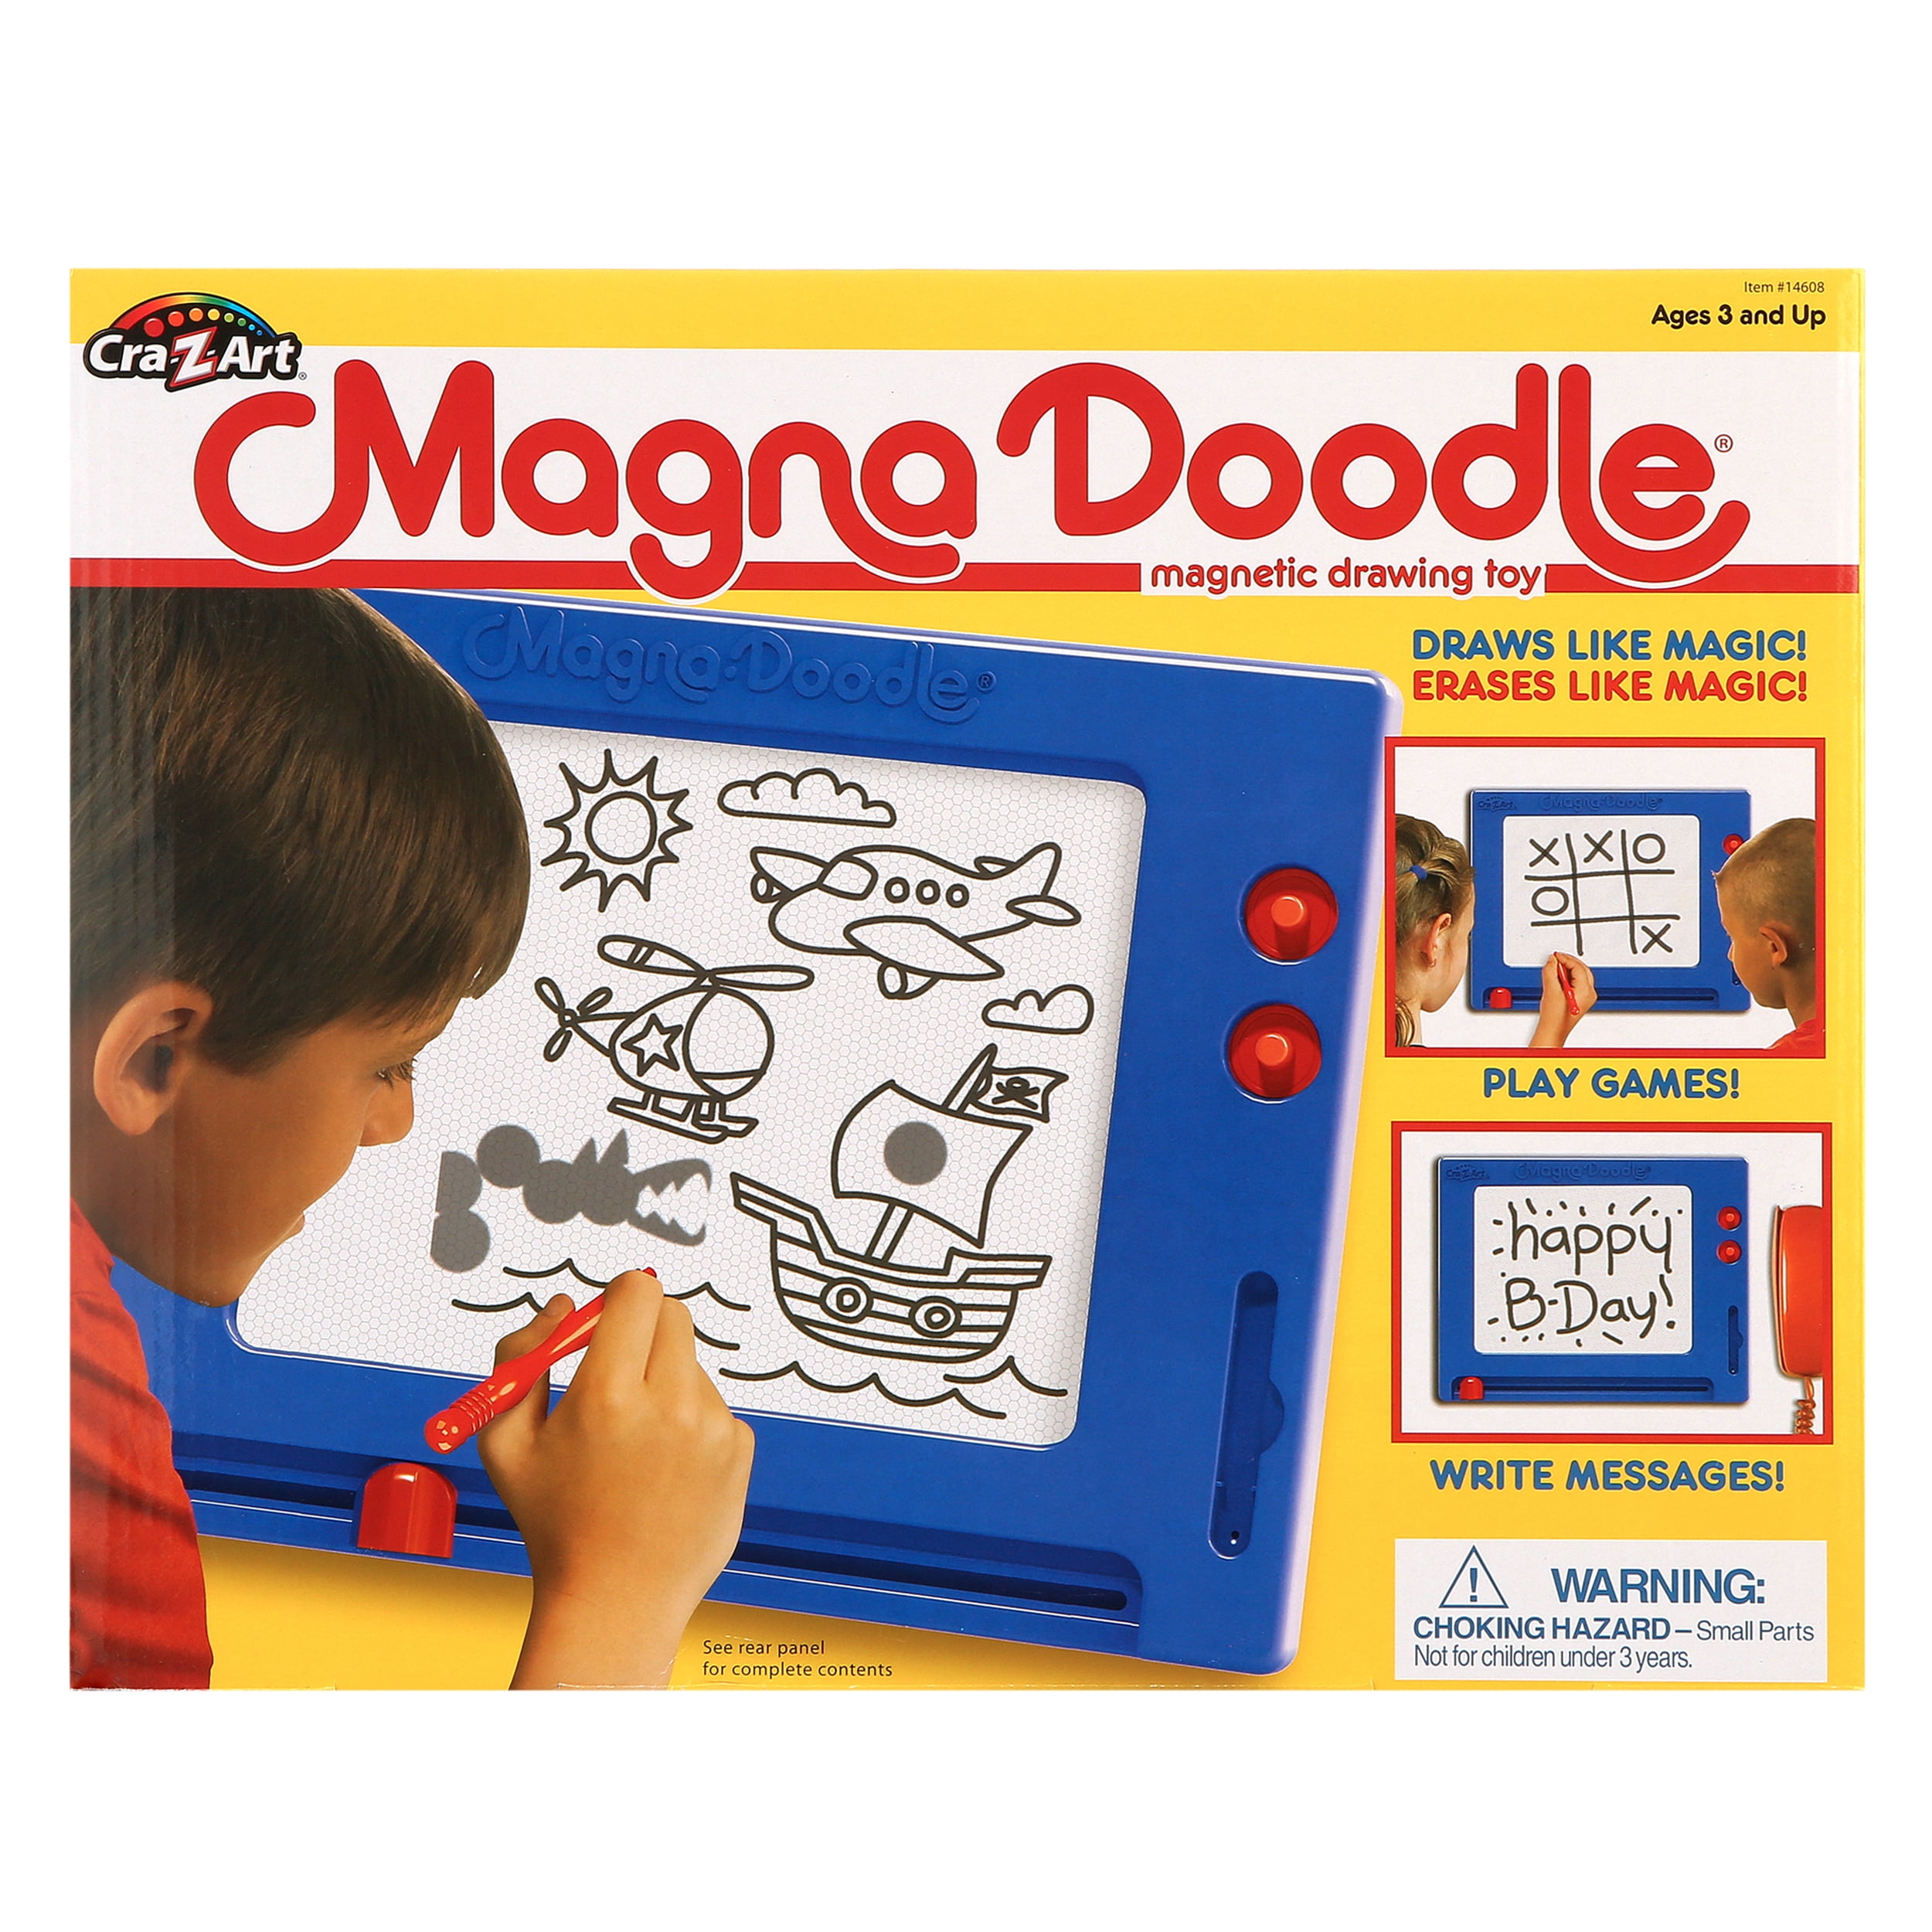 Retro Magna Doodle Plastic Classic Magnetic Drawing Toy Kids Children Preschool 